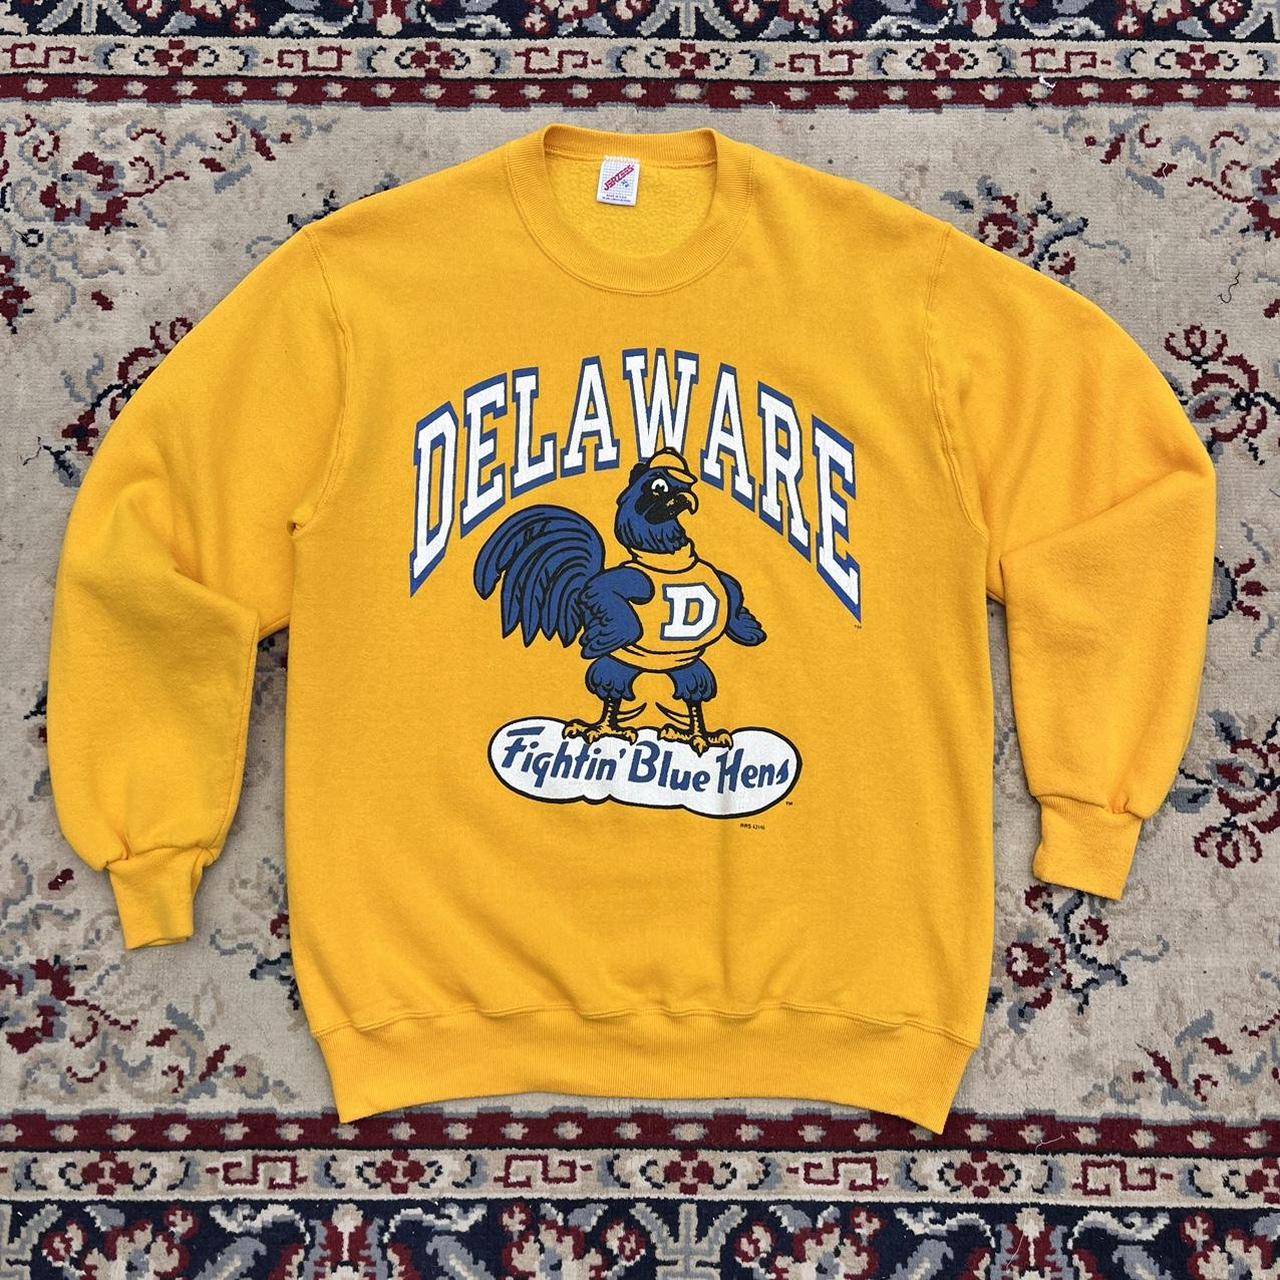 American Vintage Men's Yellow Sweatshirt